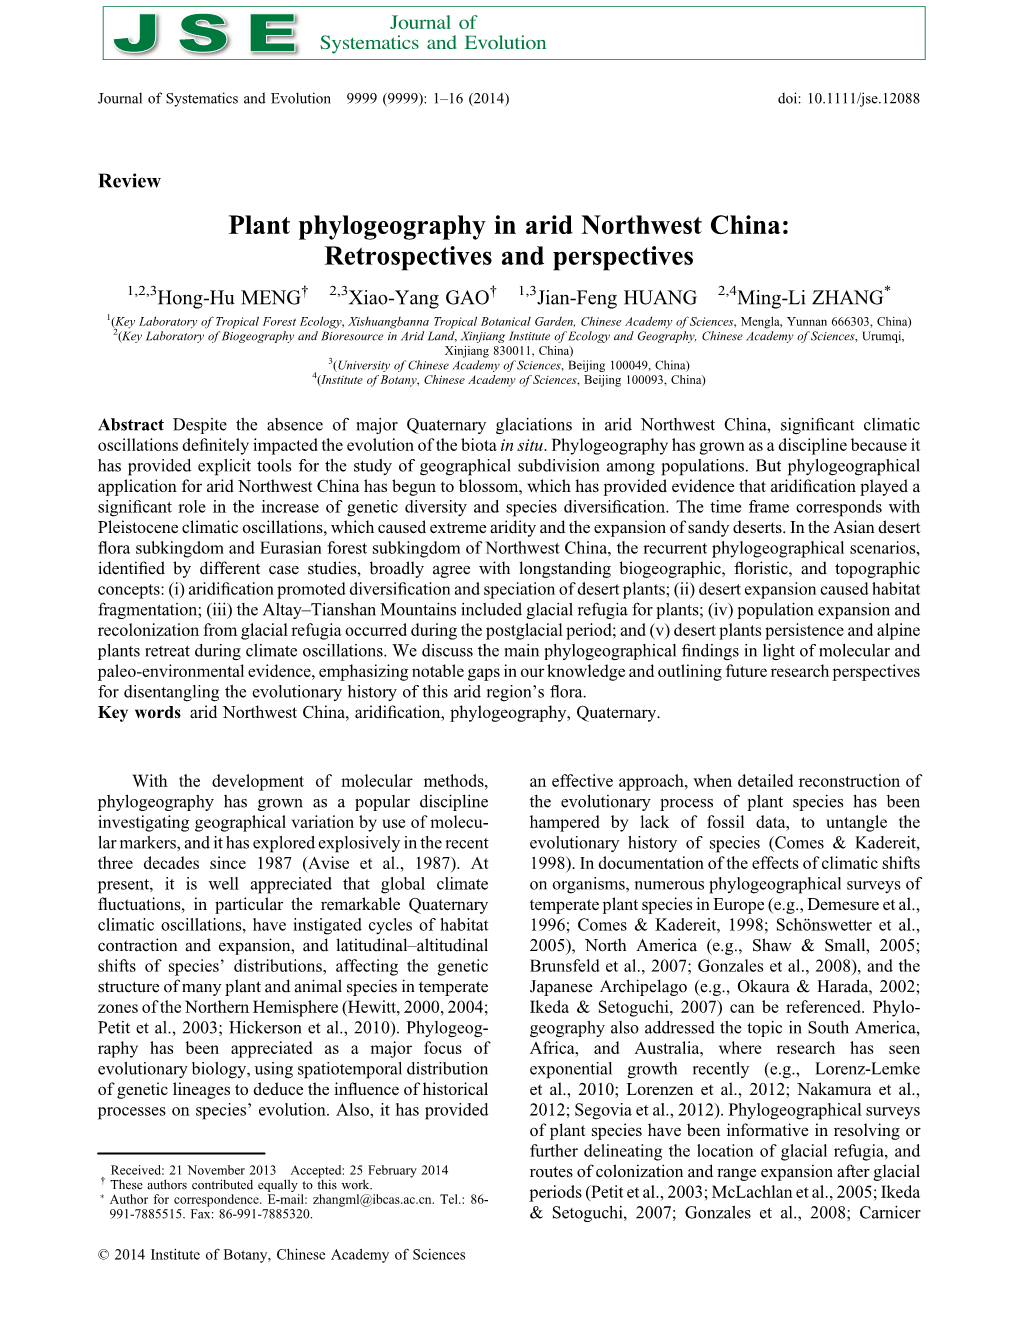 Plant Phylogeography in Arid Northwest China: Retrospectives